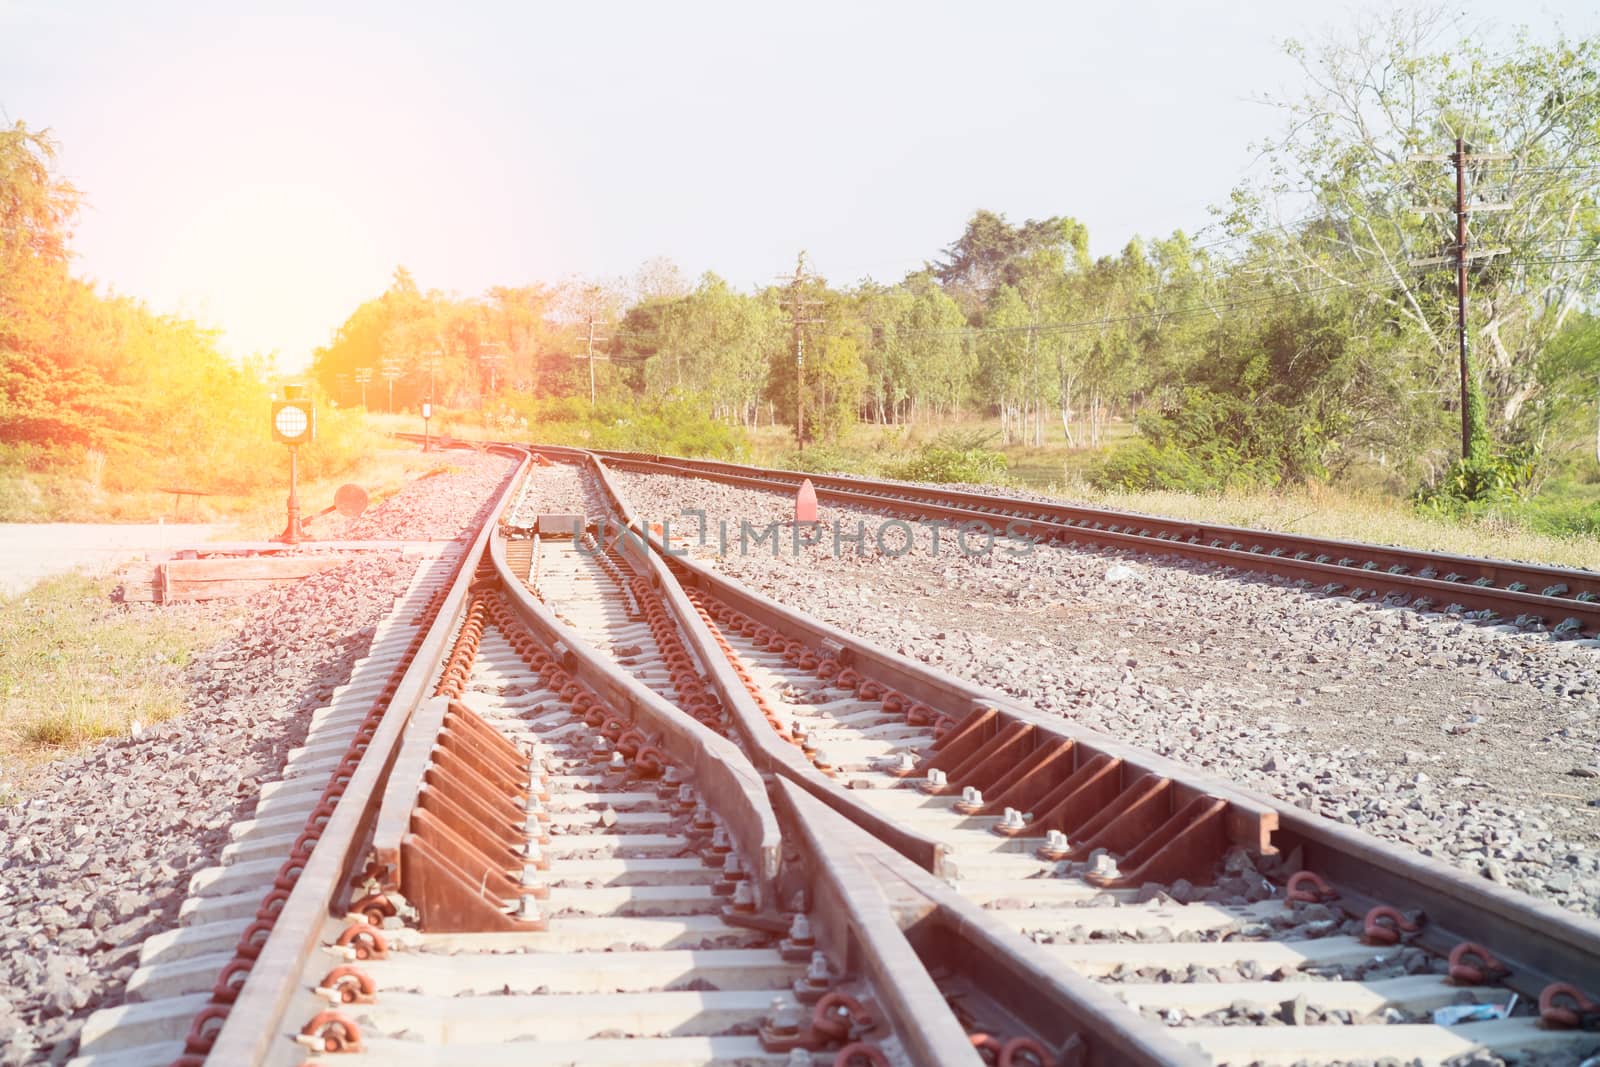 Railroad tracks in beautiful, Orange sunset in low clouds over railroad.